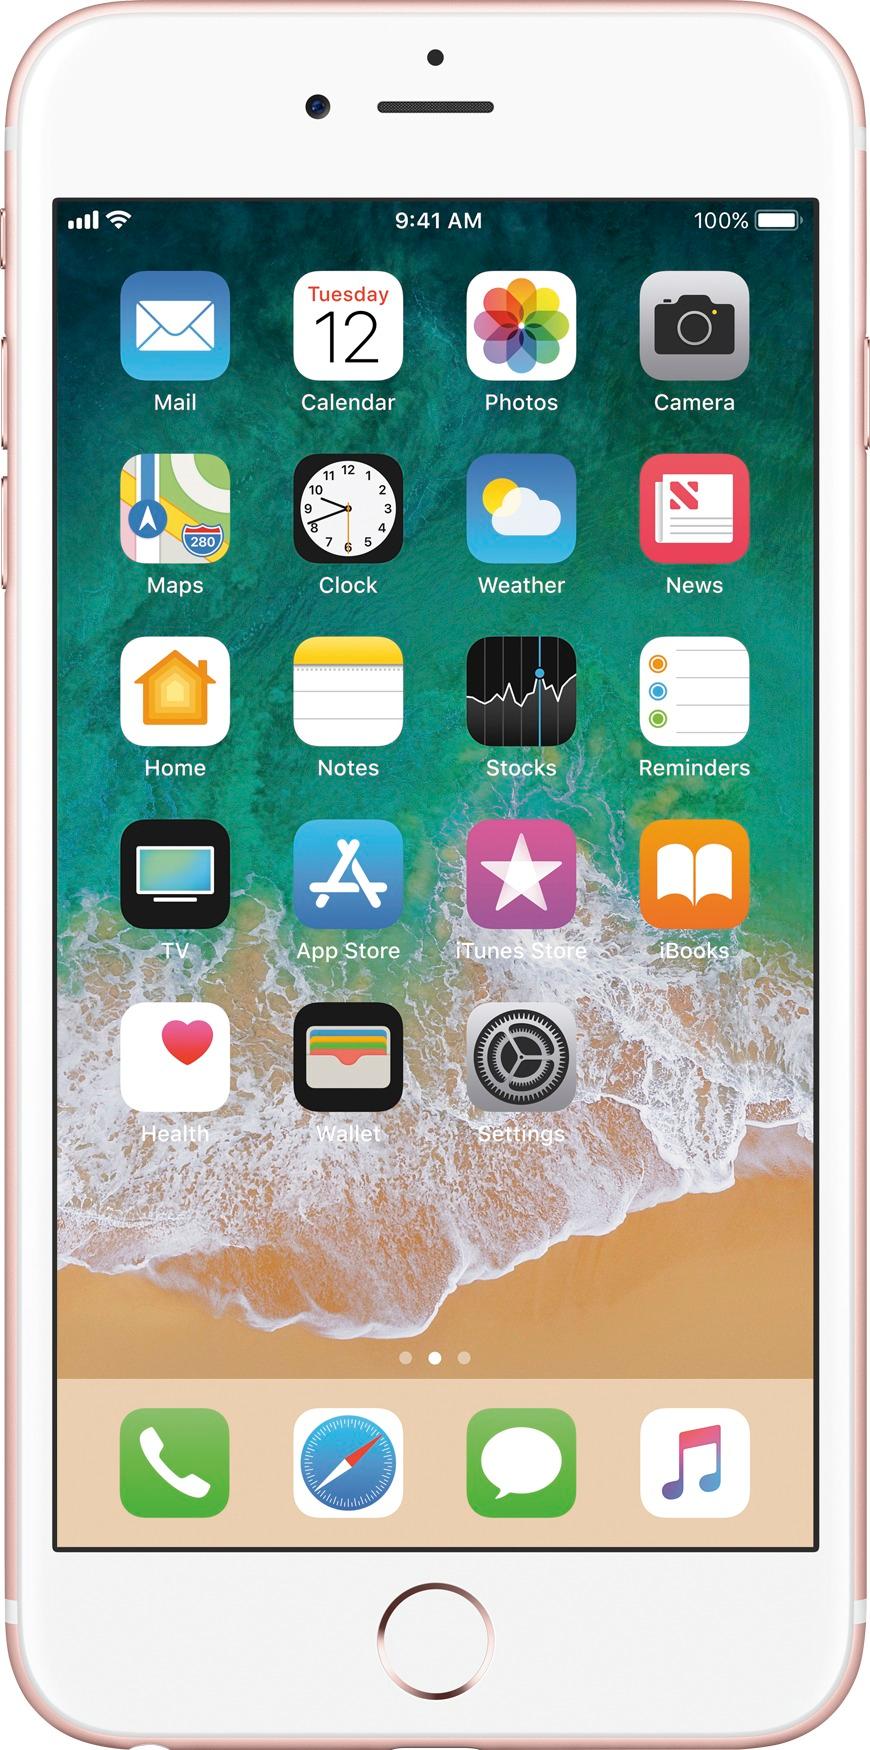 Original Apple iPhone 6s Plus Smartphone 5.5 4G LTE Touch ID 4Color  Unlocked